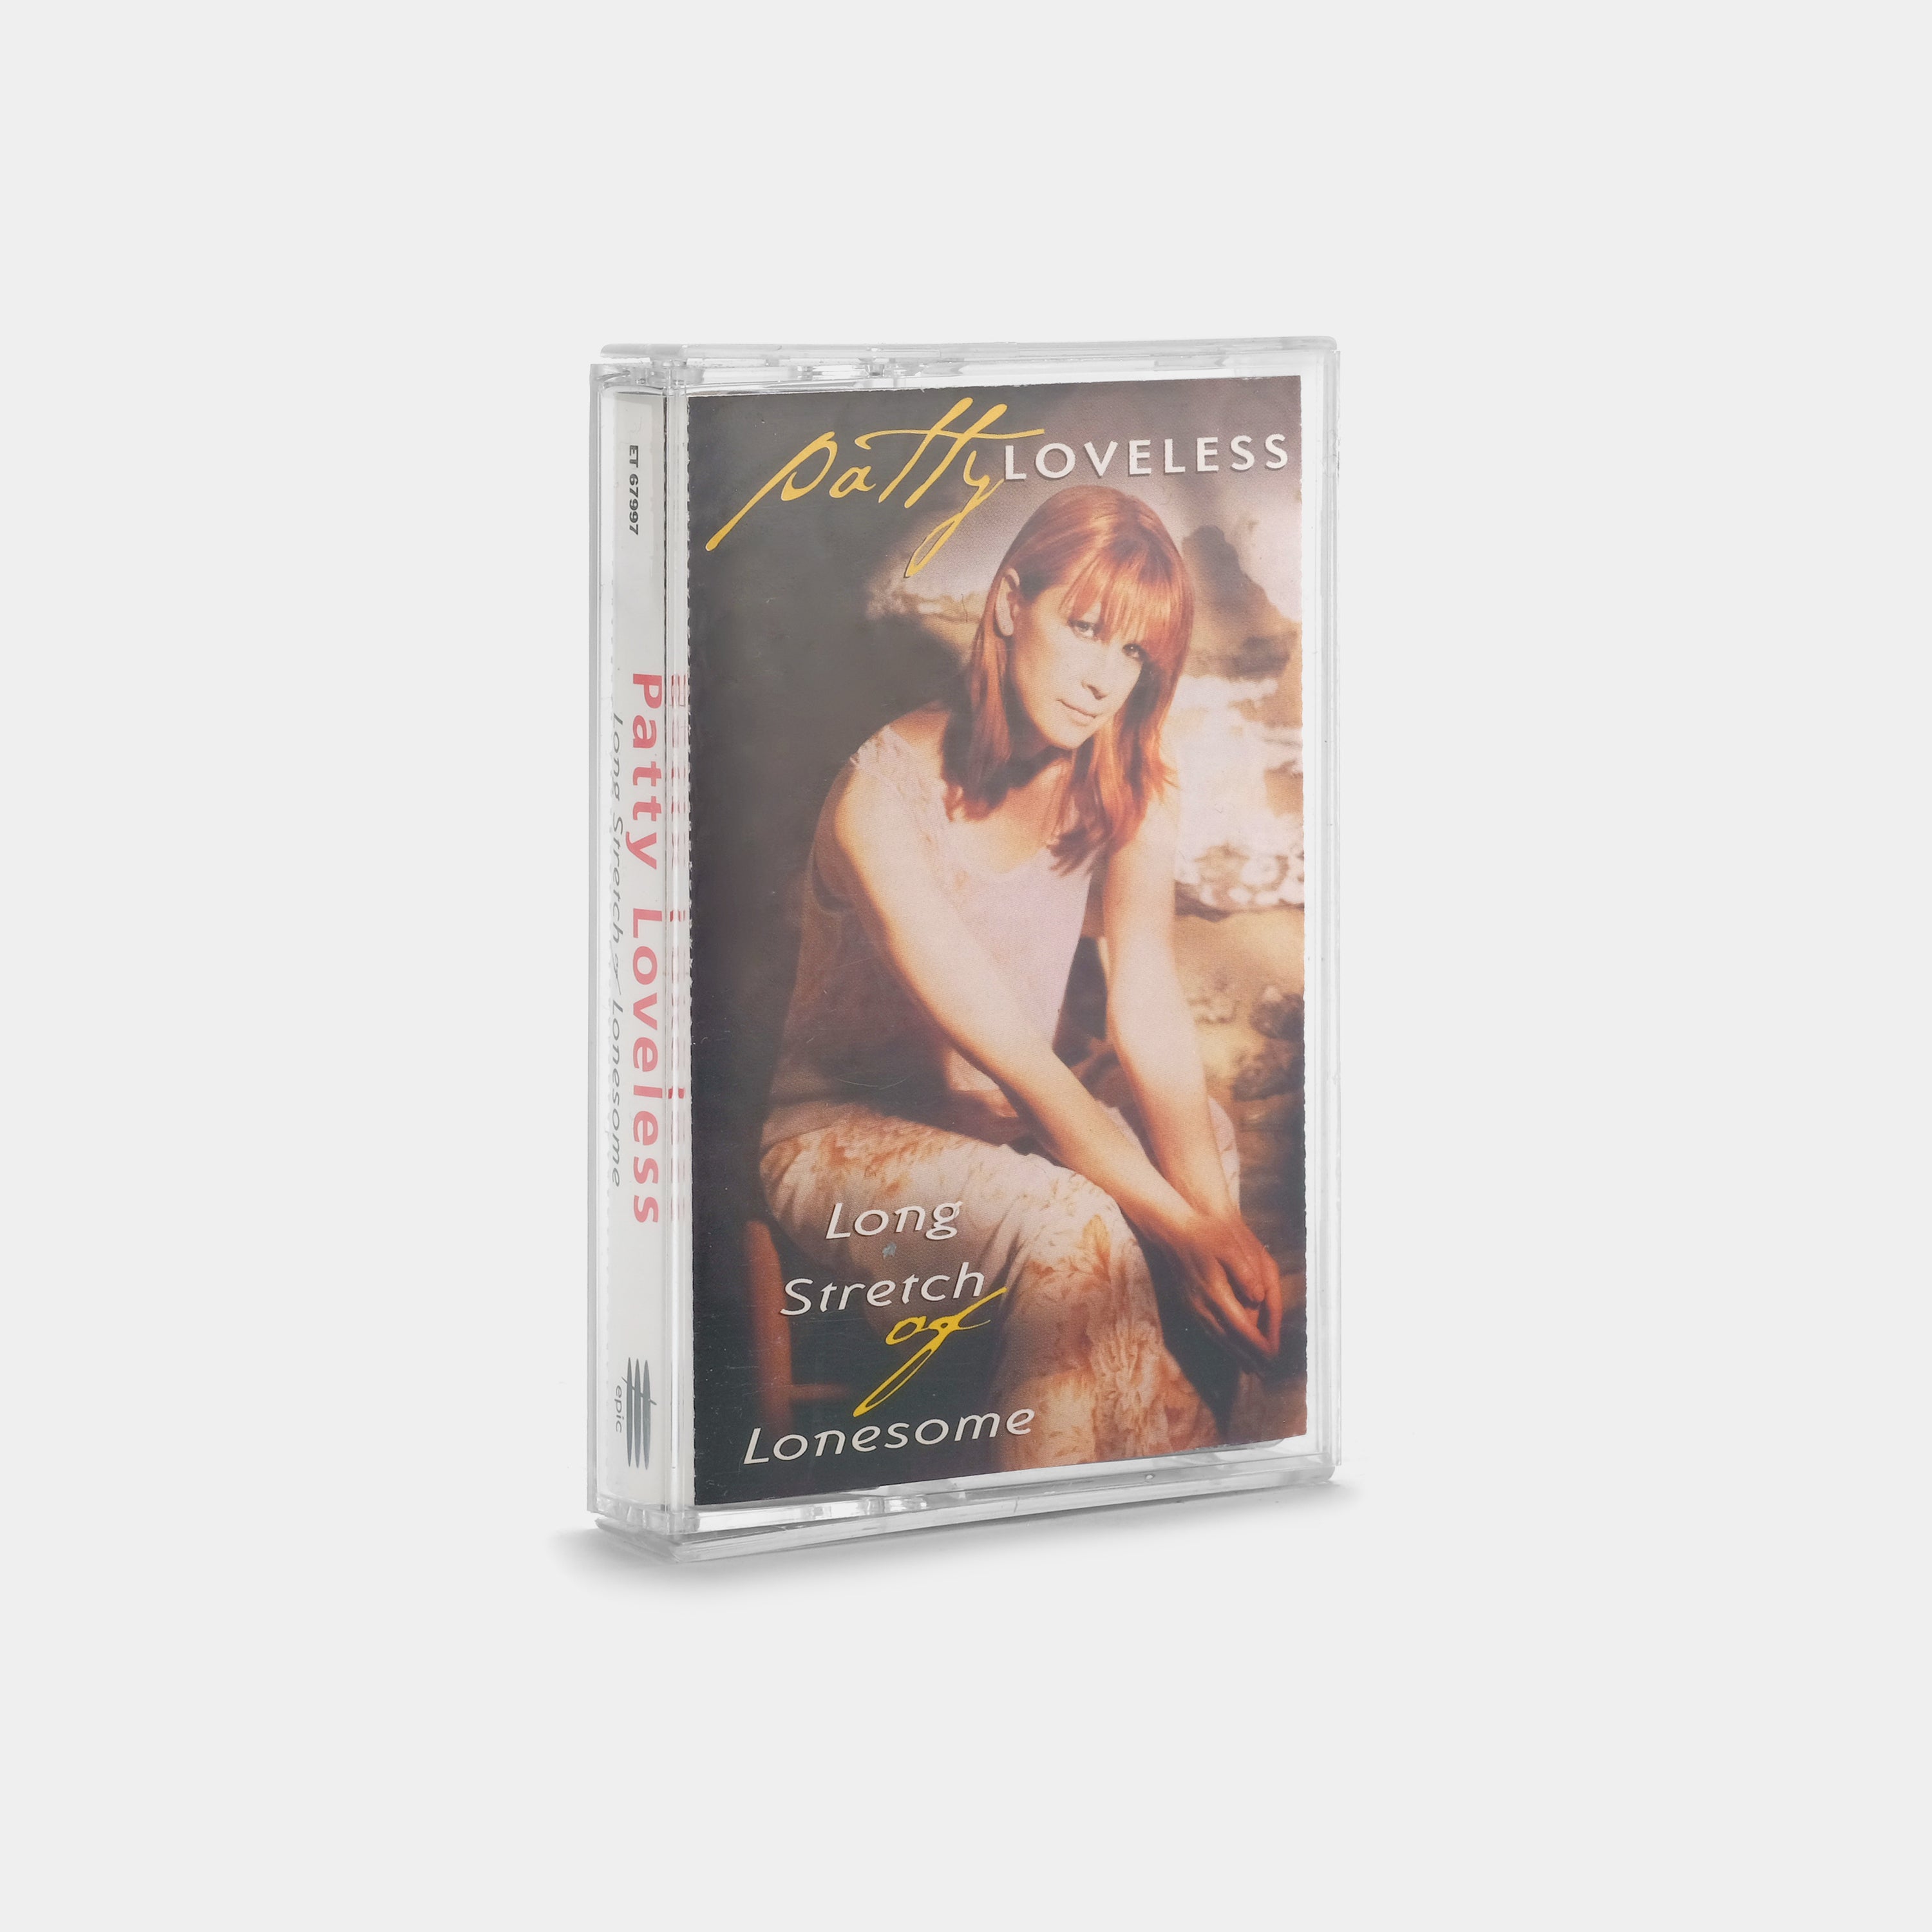 Patty Loveless - Long Stretch of Lonesome Cassette Tape